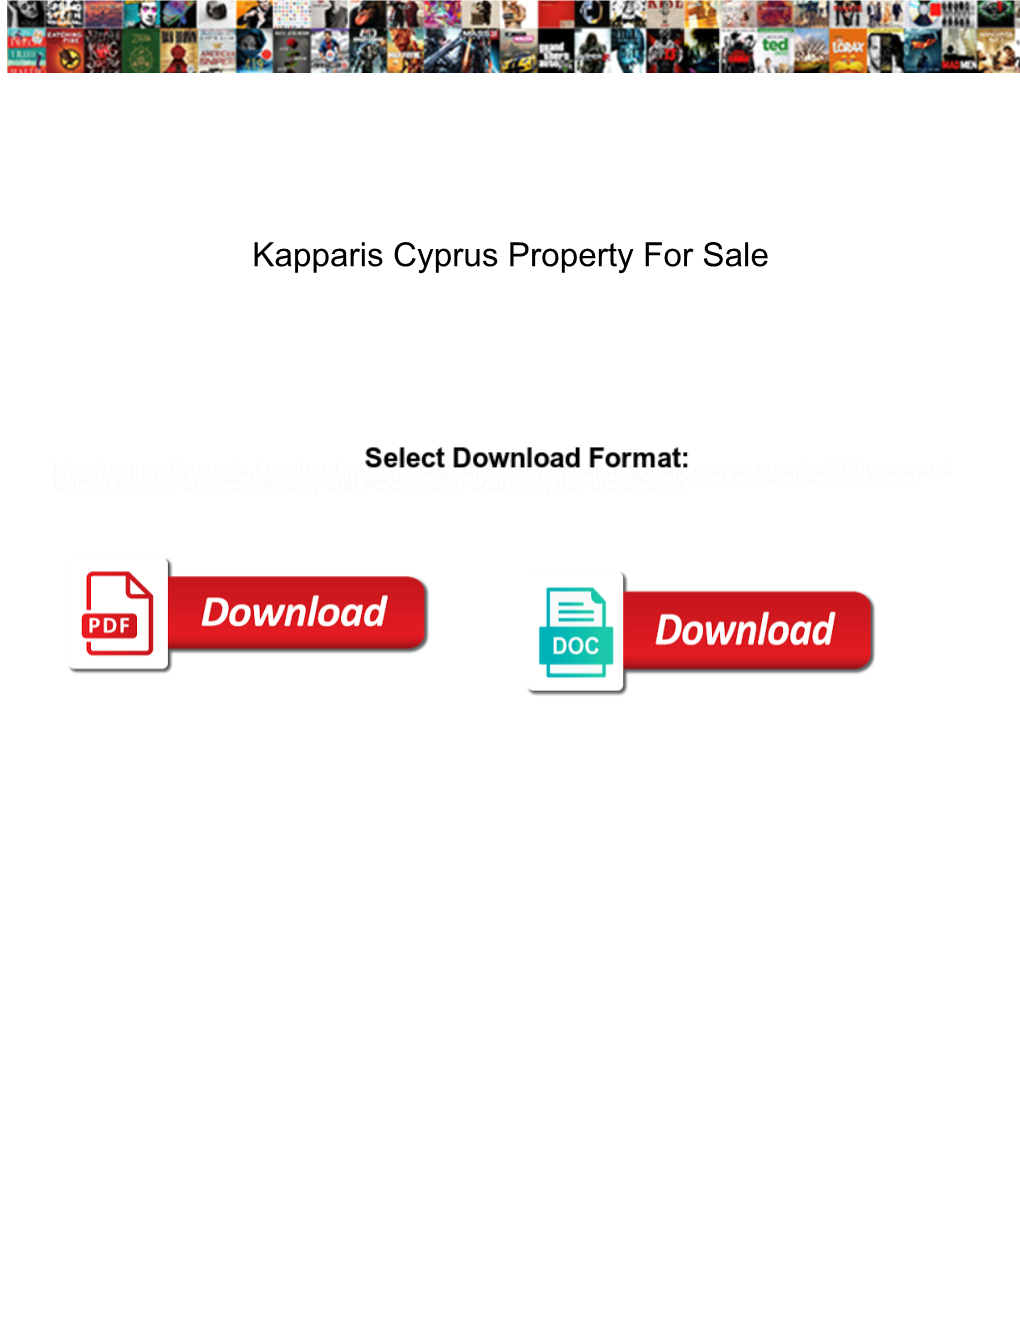 Kapparis Cyprus Property for Sale